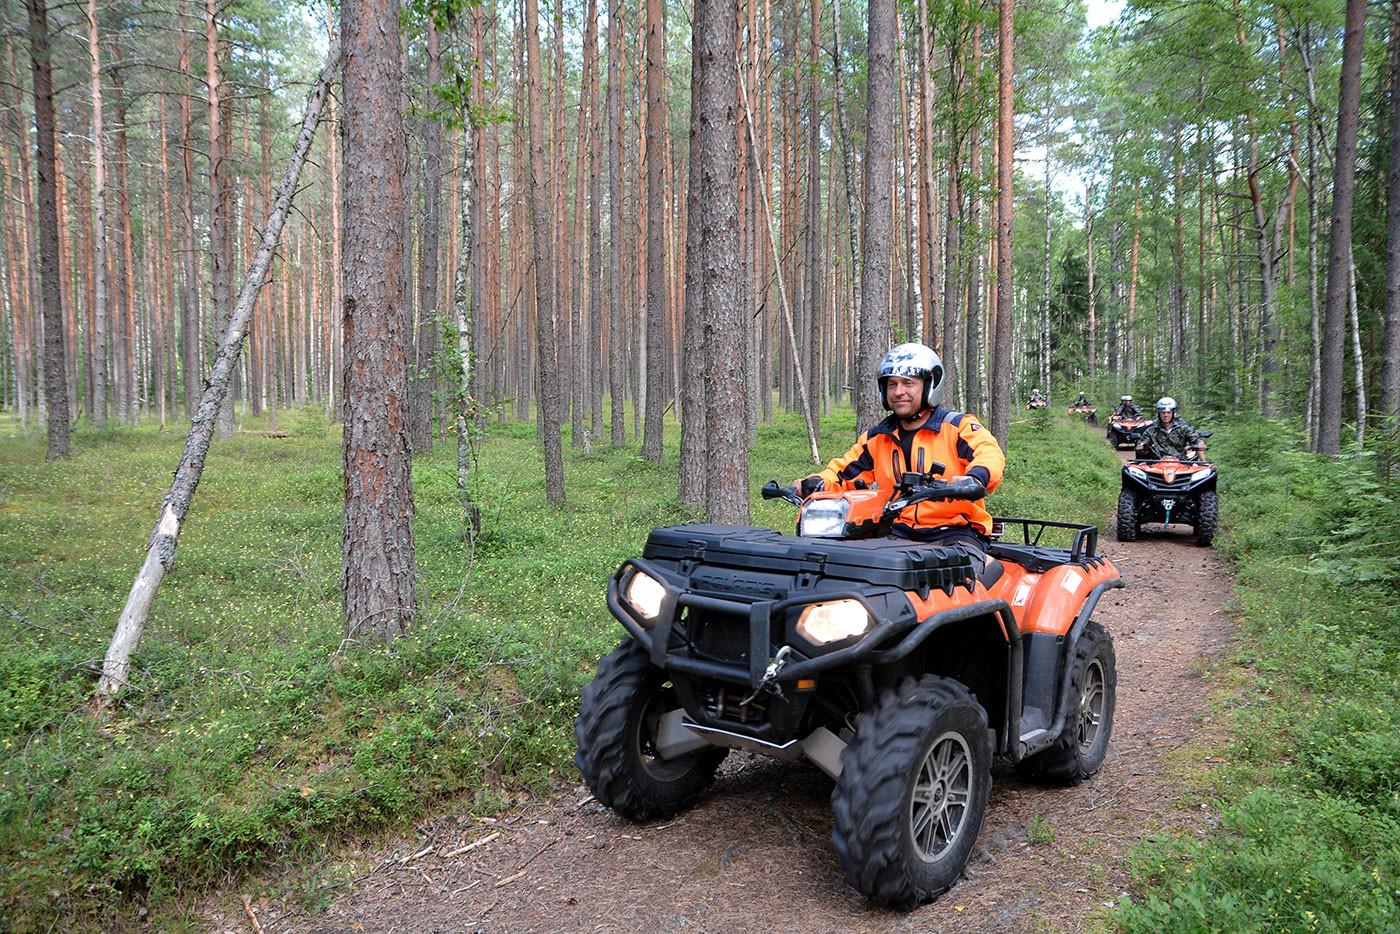 Reiu ATV trip, led by an instructor